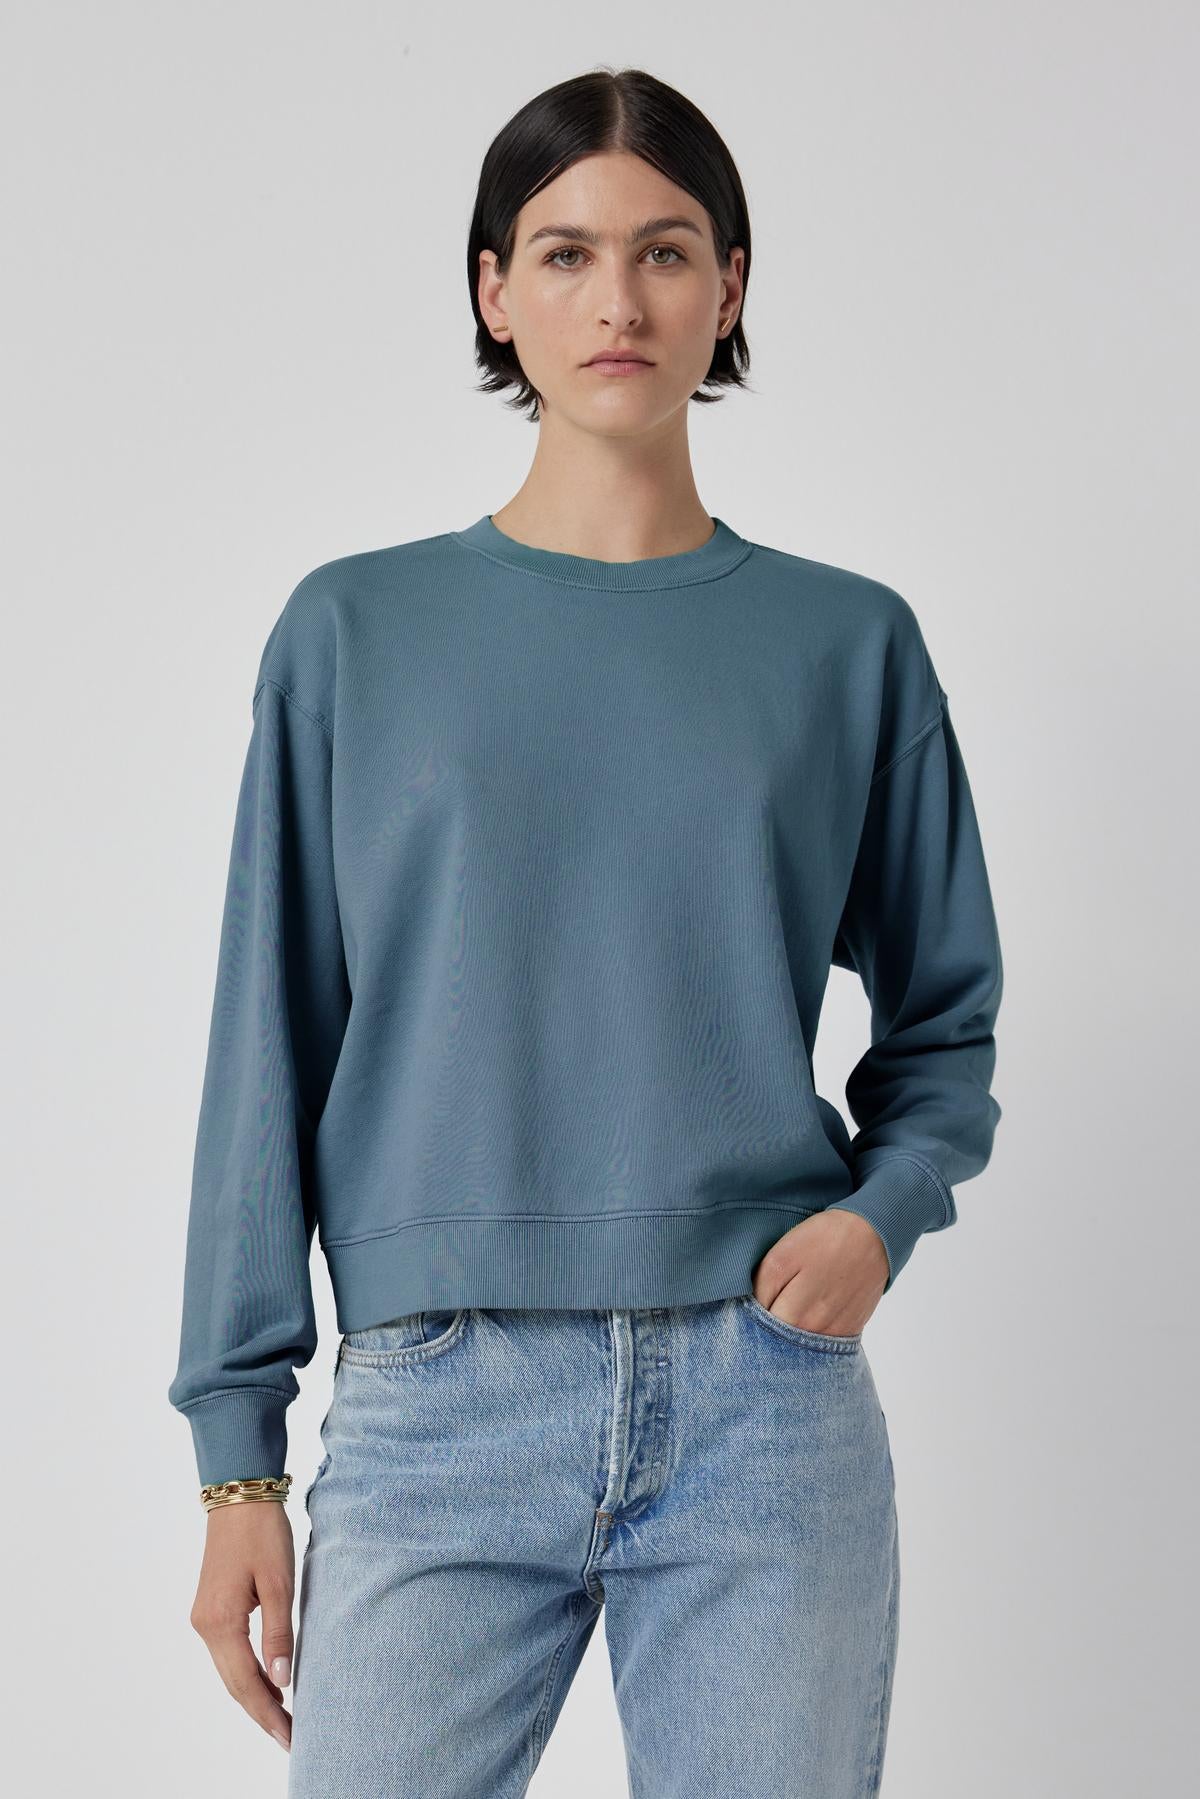 The model is wearing a Velvet by Jenny Graham Ynez sweatshirt and jeans.-35721183690945